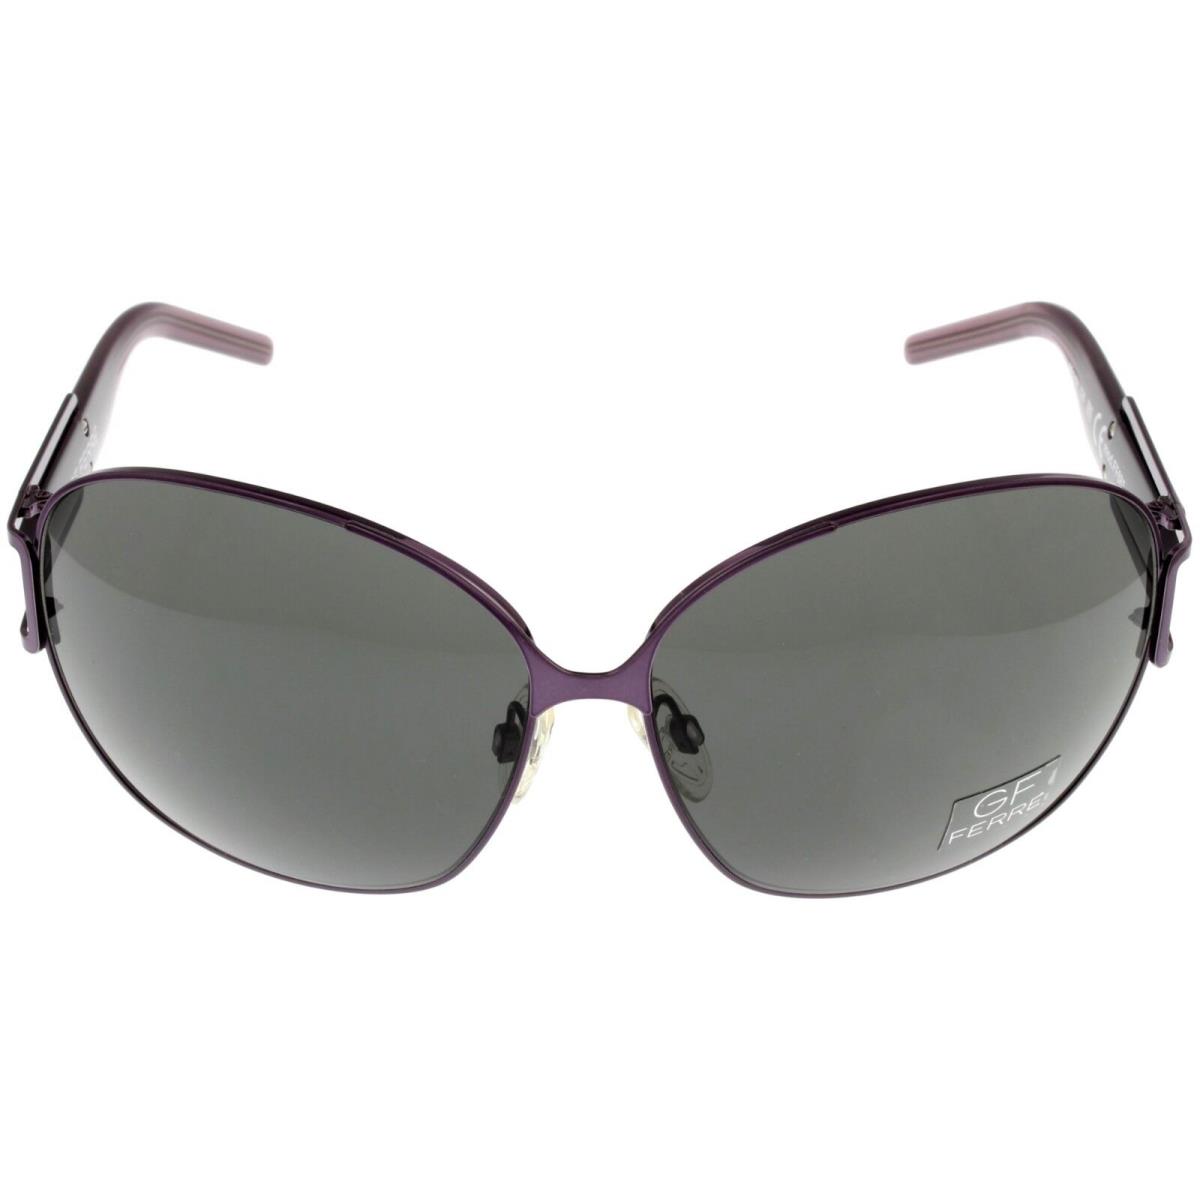 Gianfranco Ferre Sunglasses Women Violet Gray Rectangular FF685 03